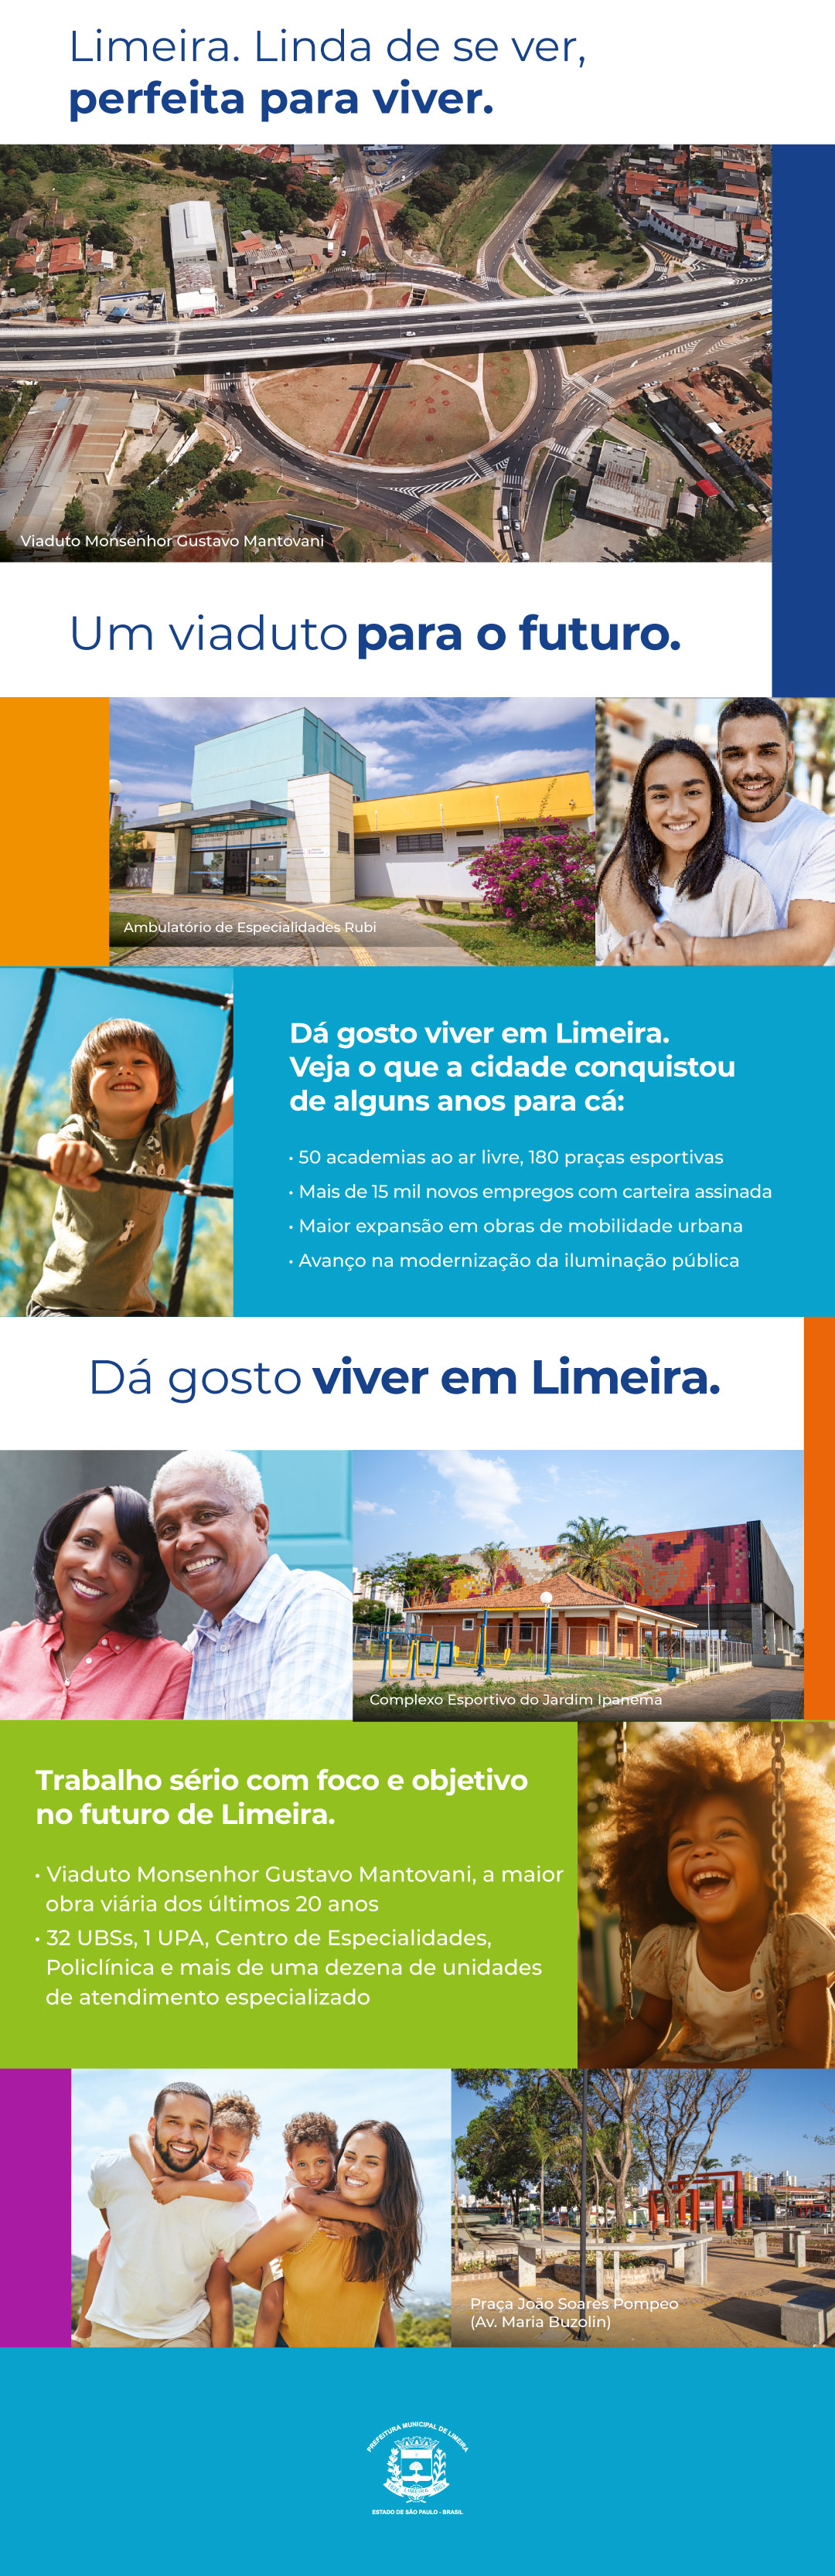 011_Viva-Limeira_Site